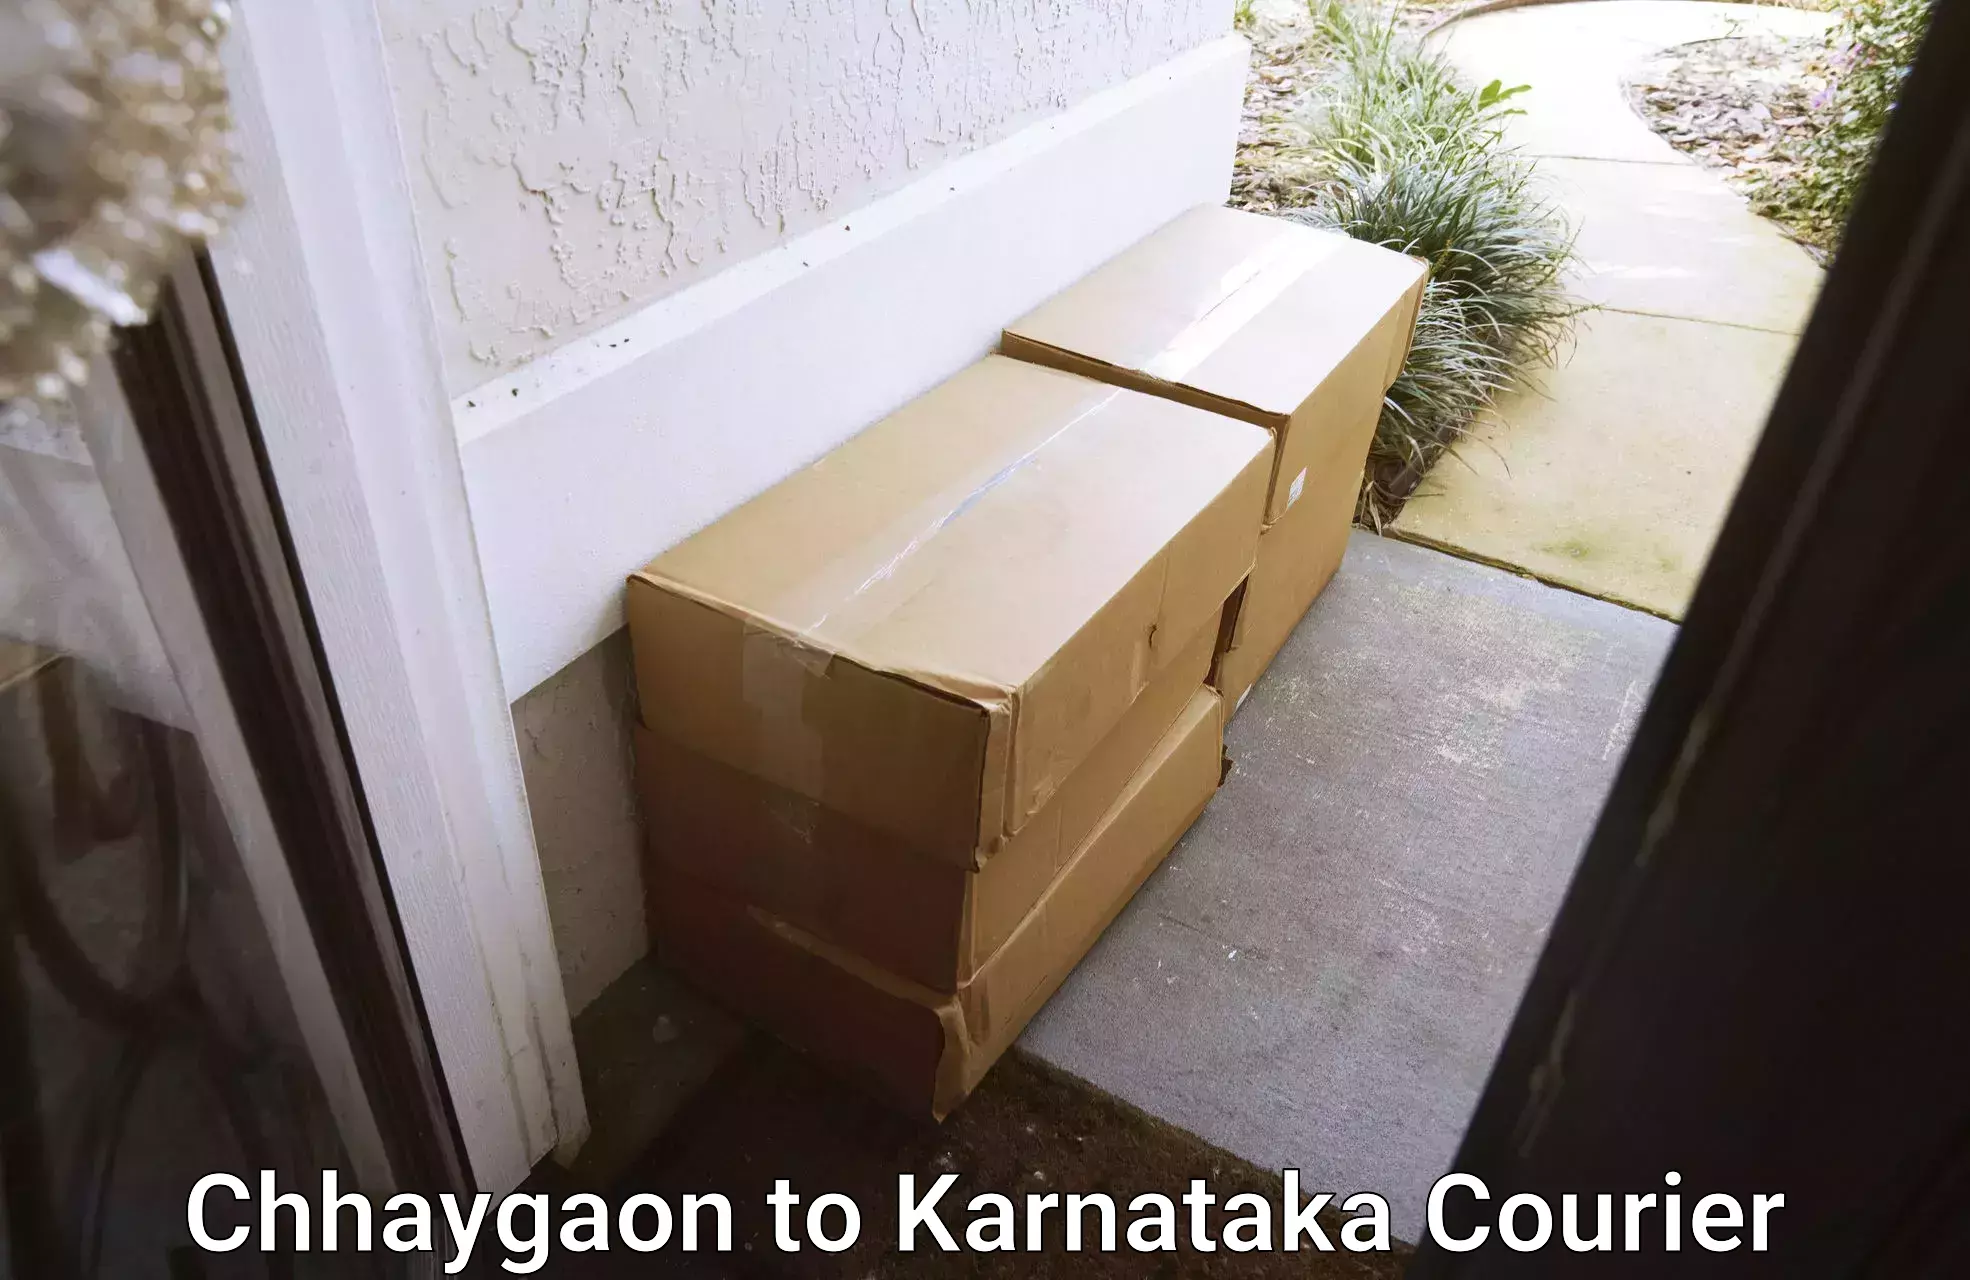 Courier service innovation Chhaygaon to Karnataka